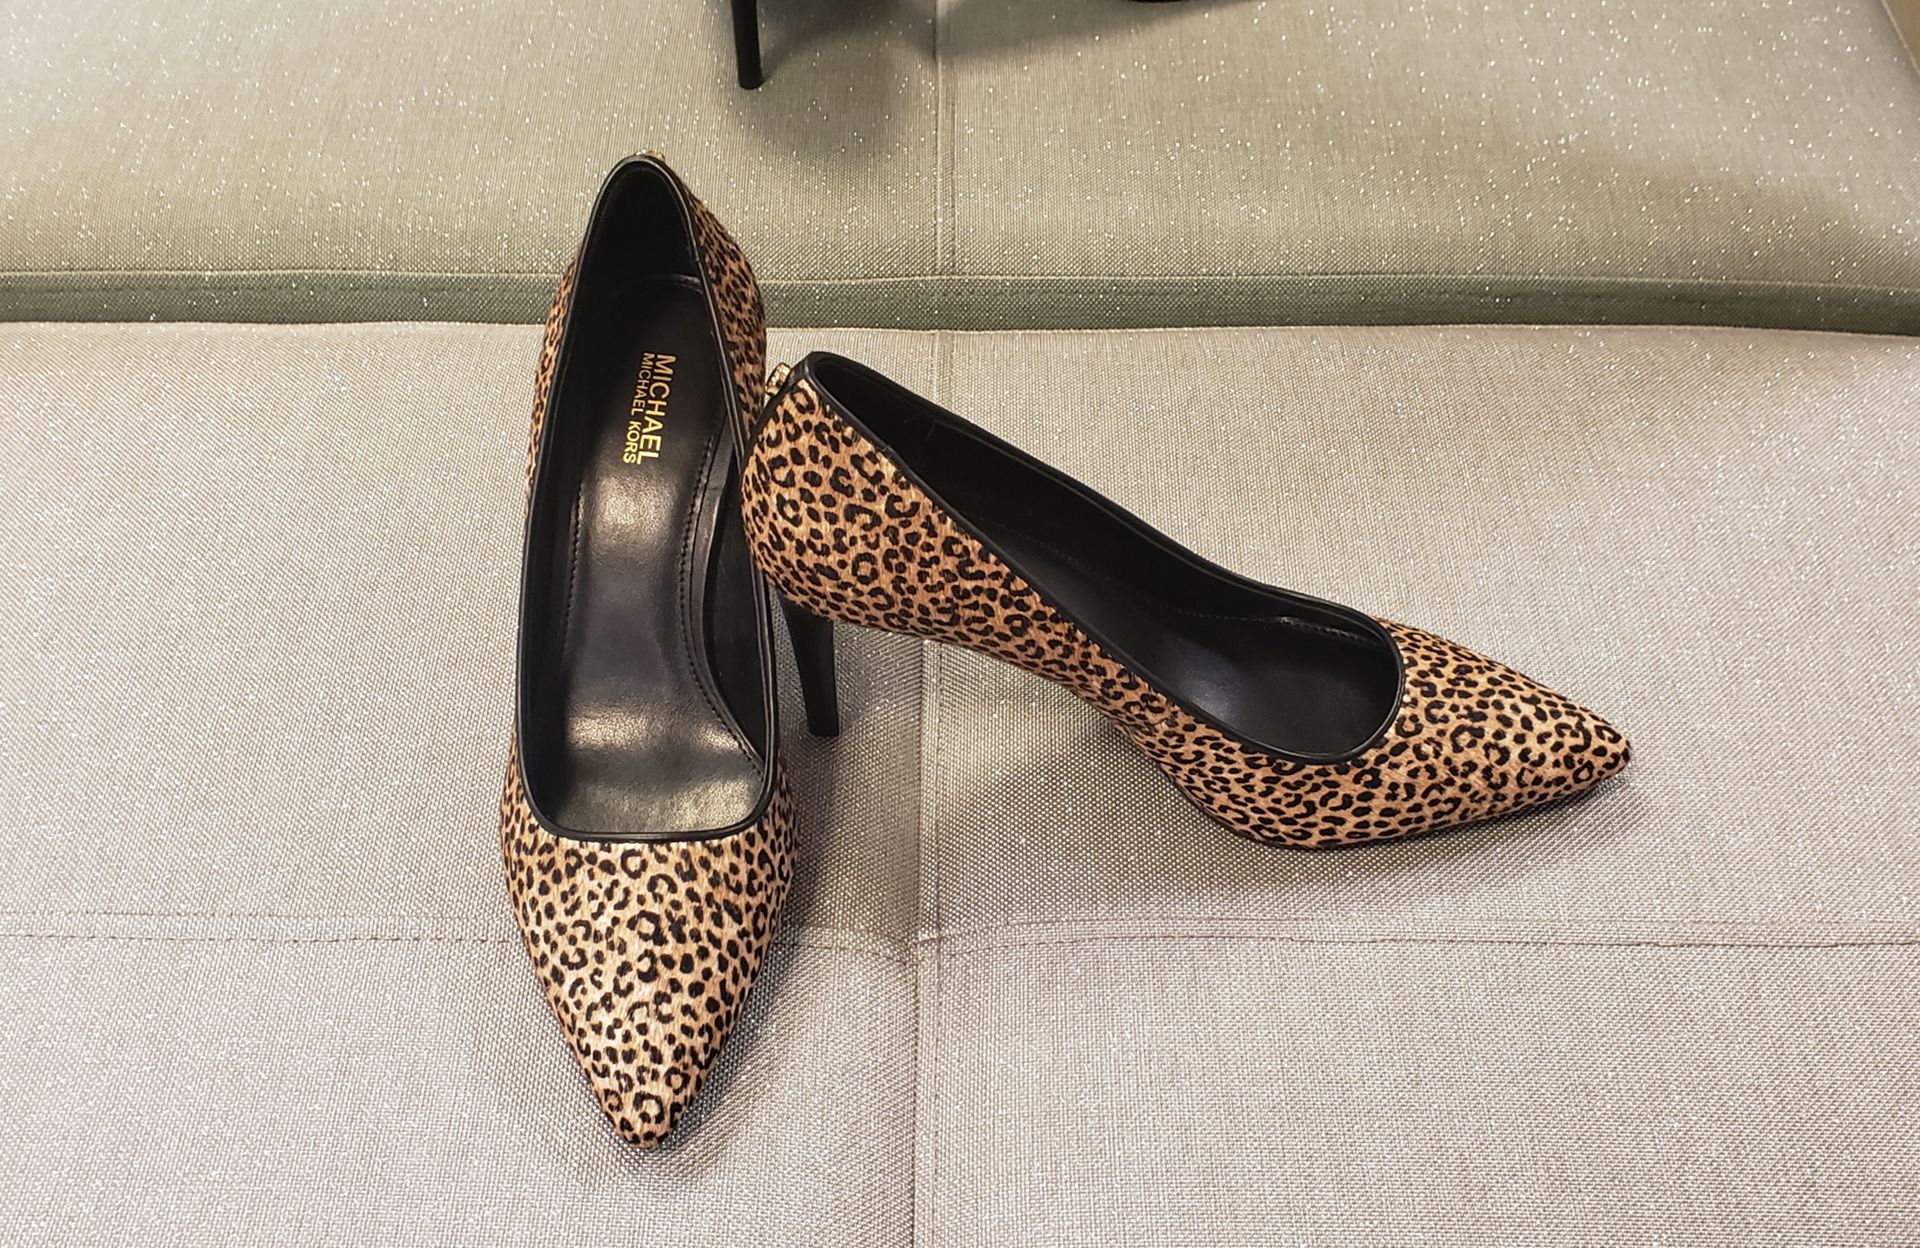 Michael Kors cheetah heels - Macys 